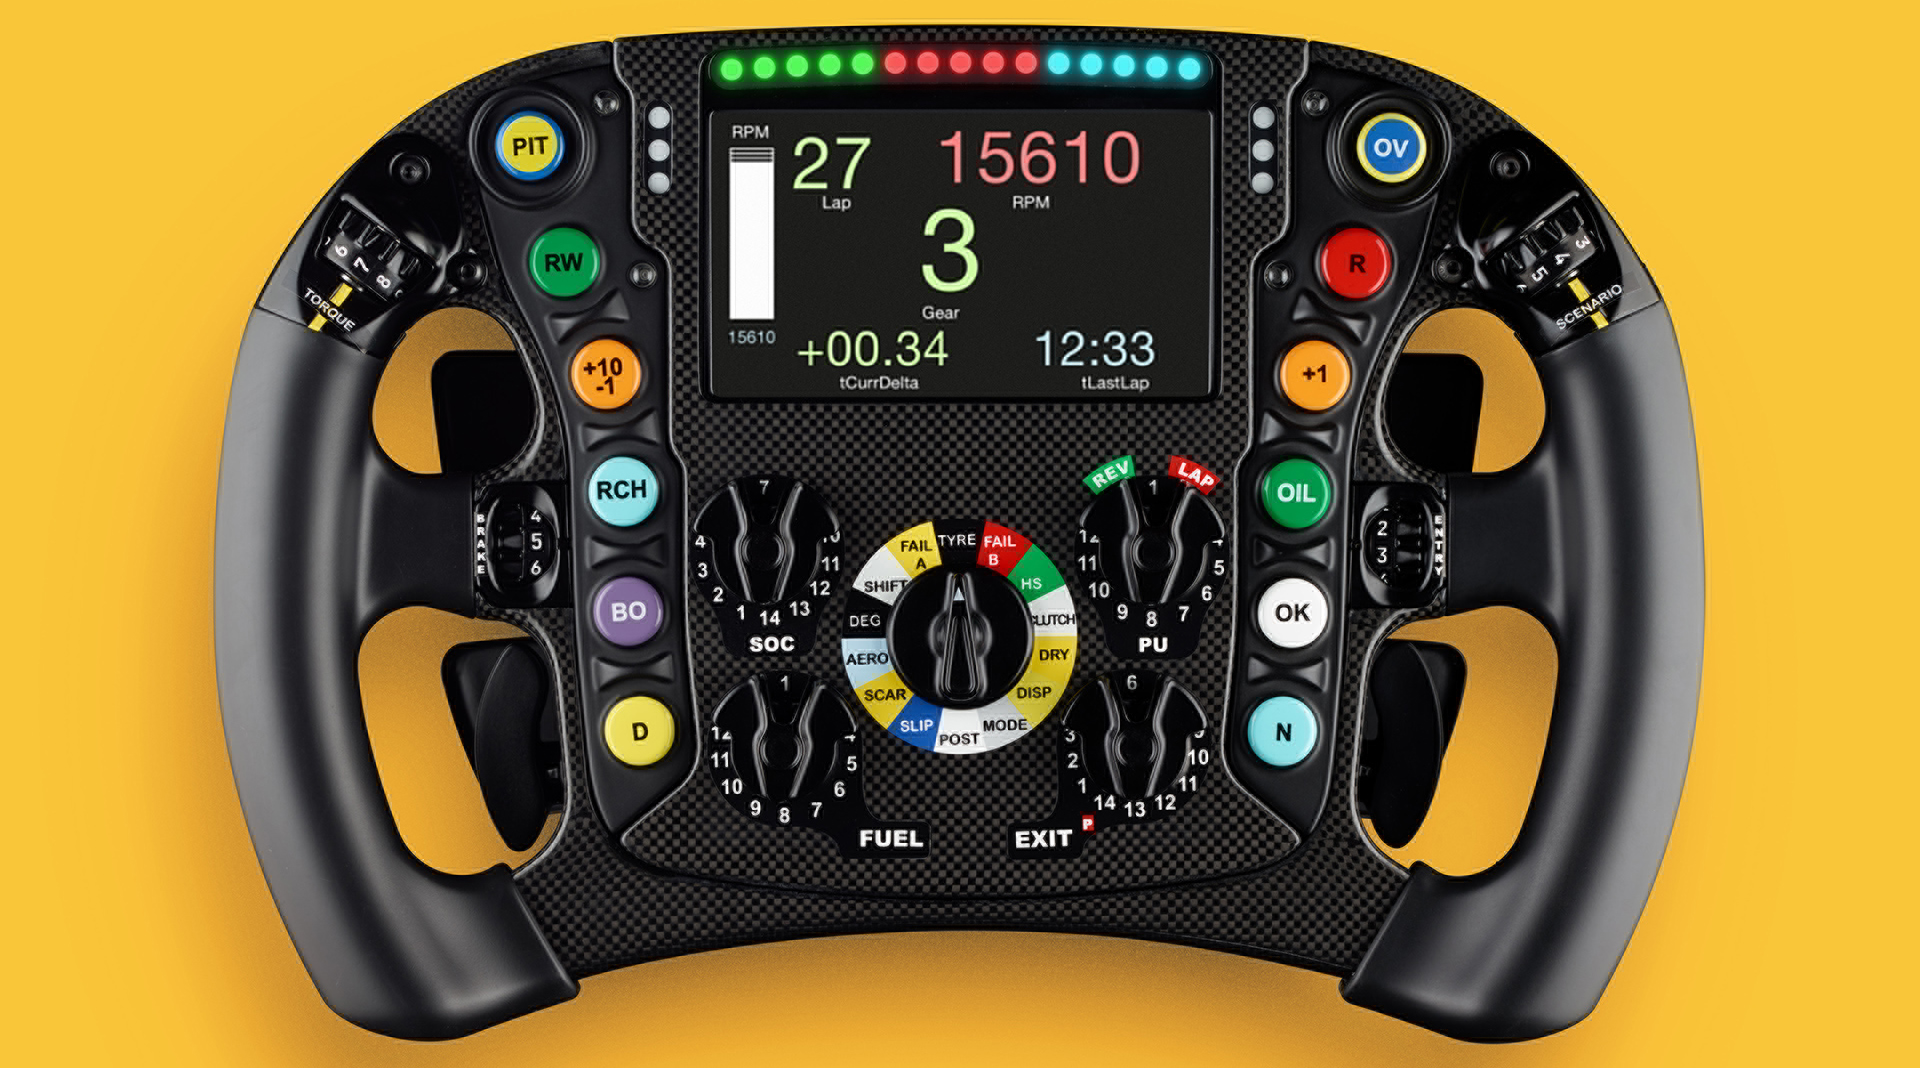 Bell & Ross steering wheel Formula One 2017